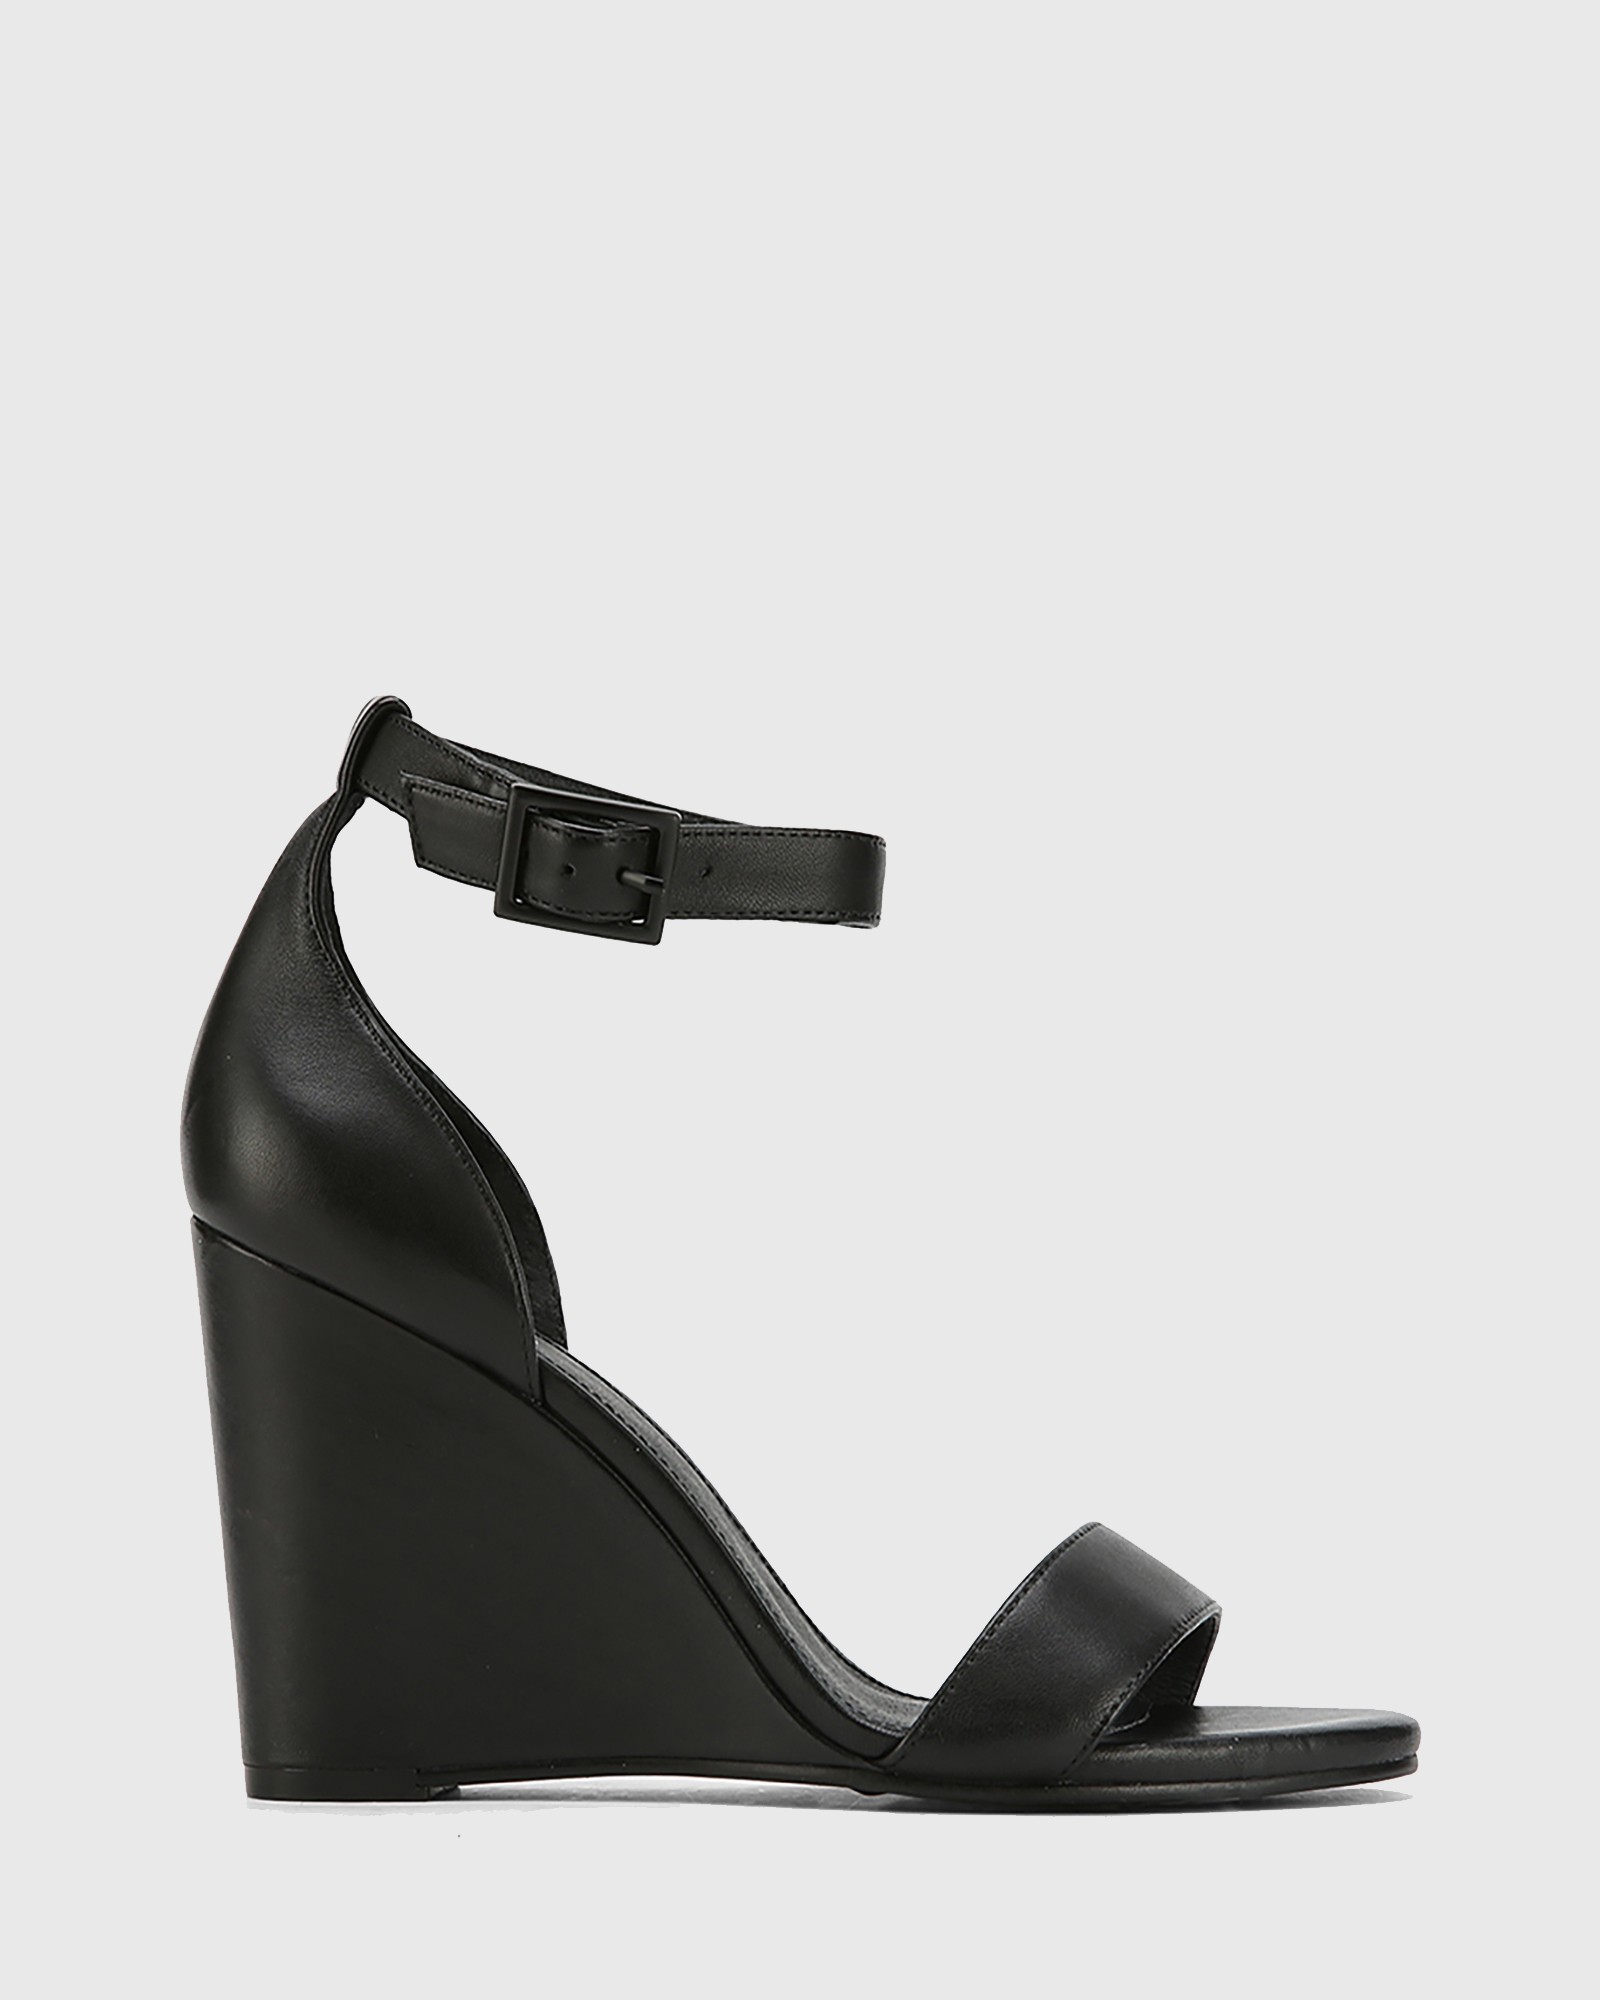 Black Wedge Heels Sandals